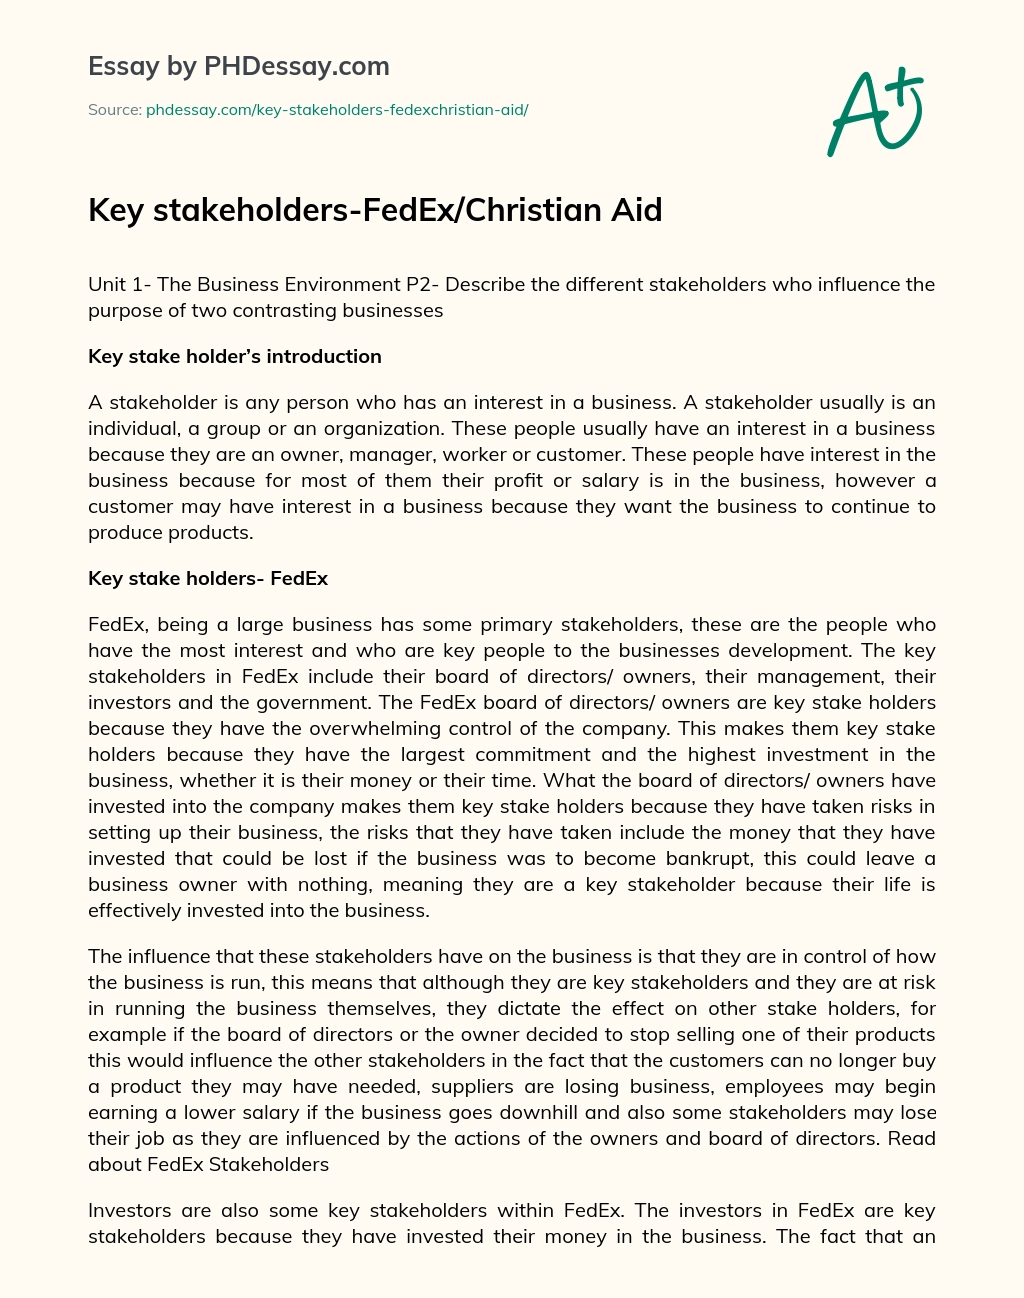 Key stakeholders-FedEx/Christian Aid essay